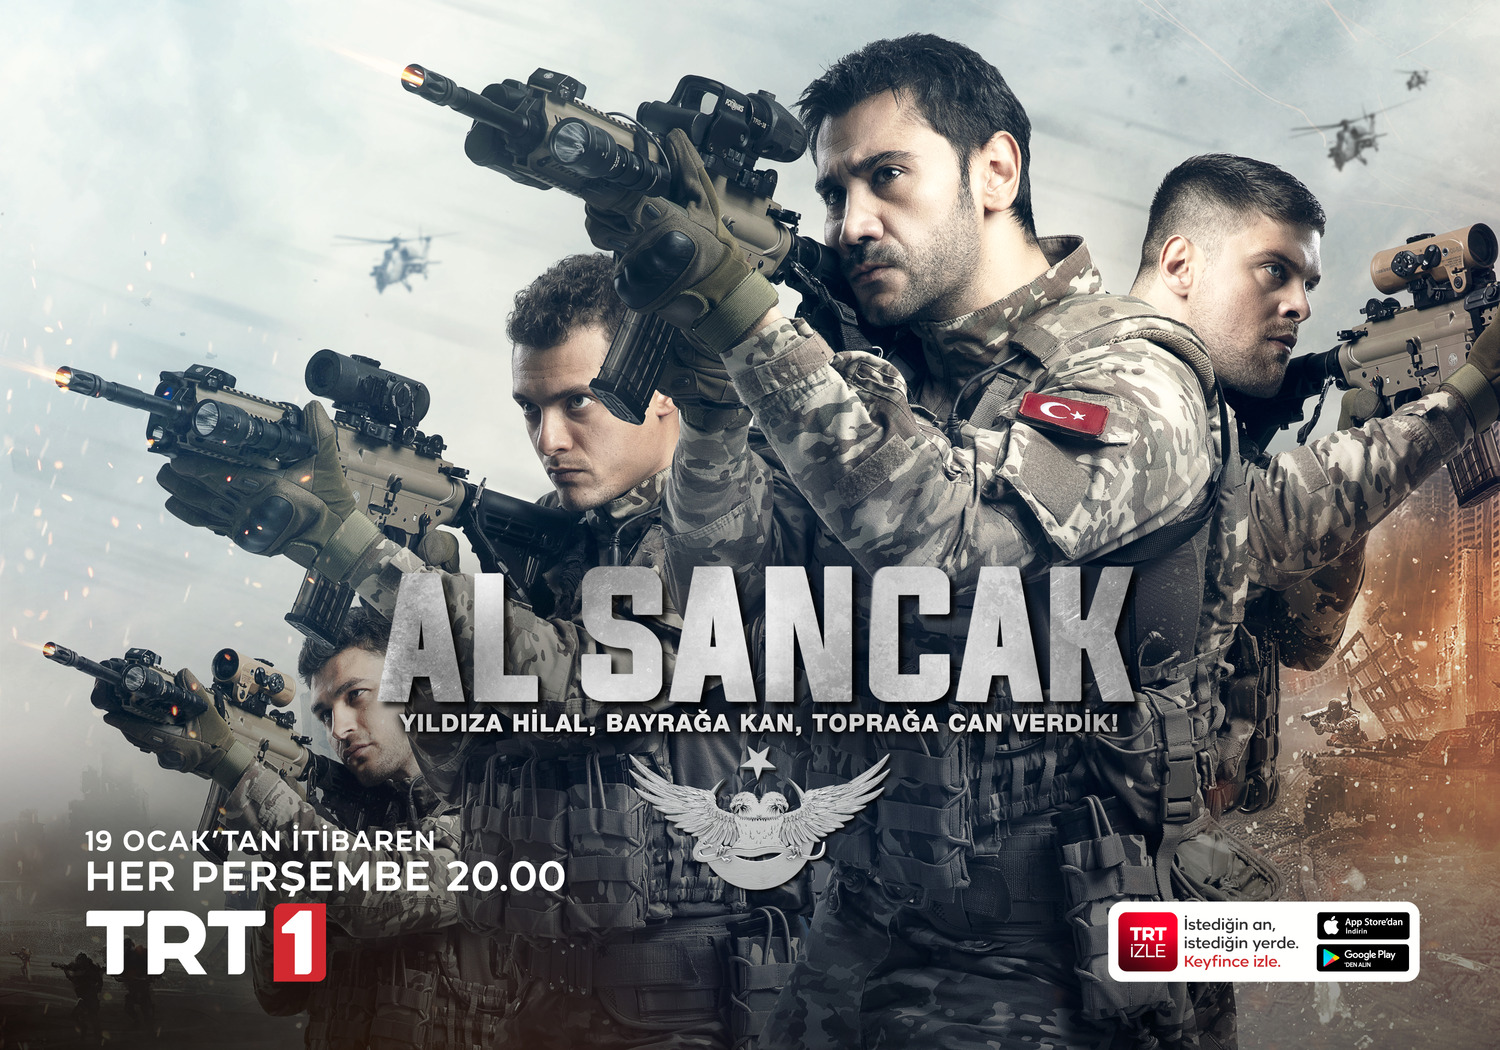 Extra Large TV Poster Image for Al Sancak (#7 of 20)